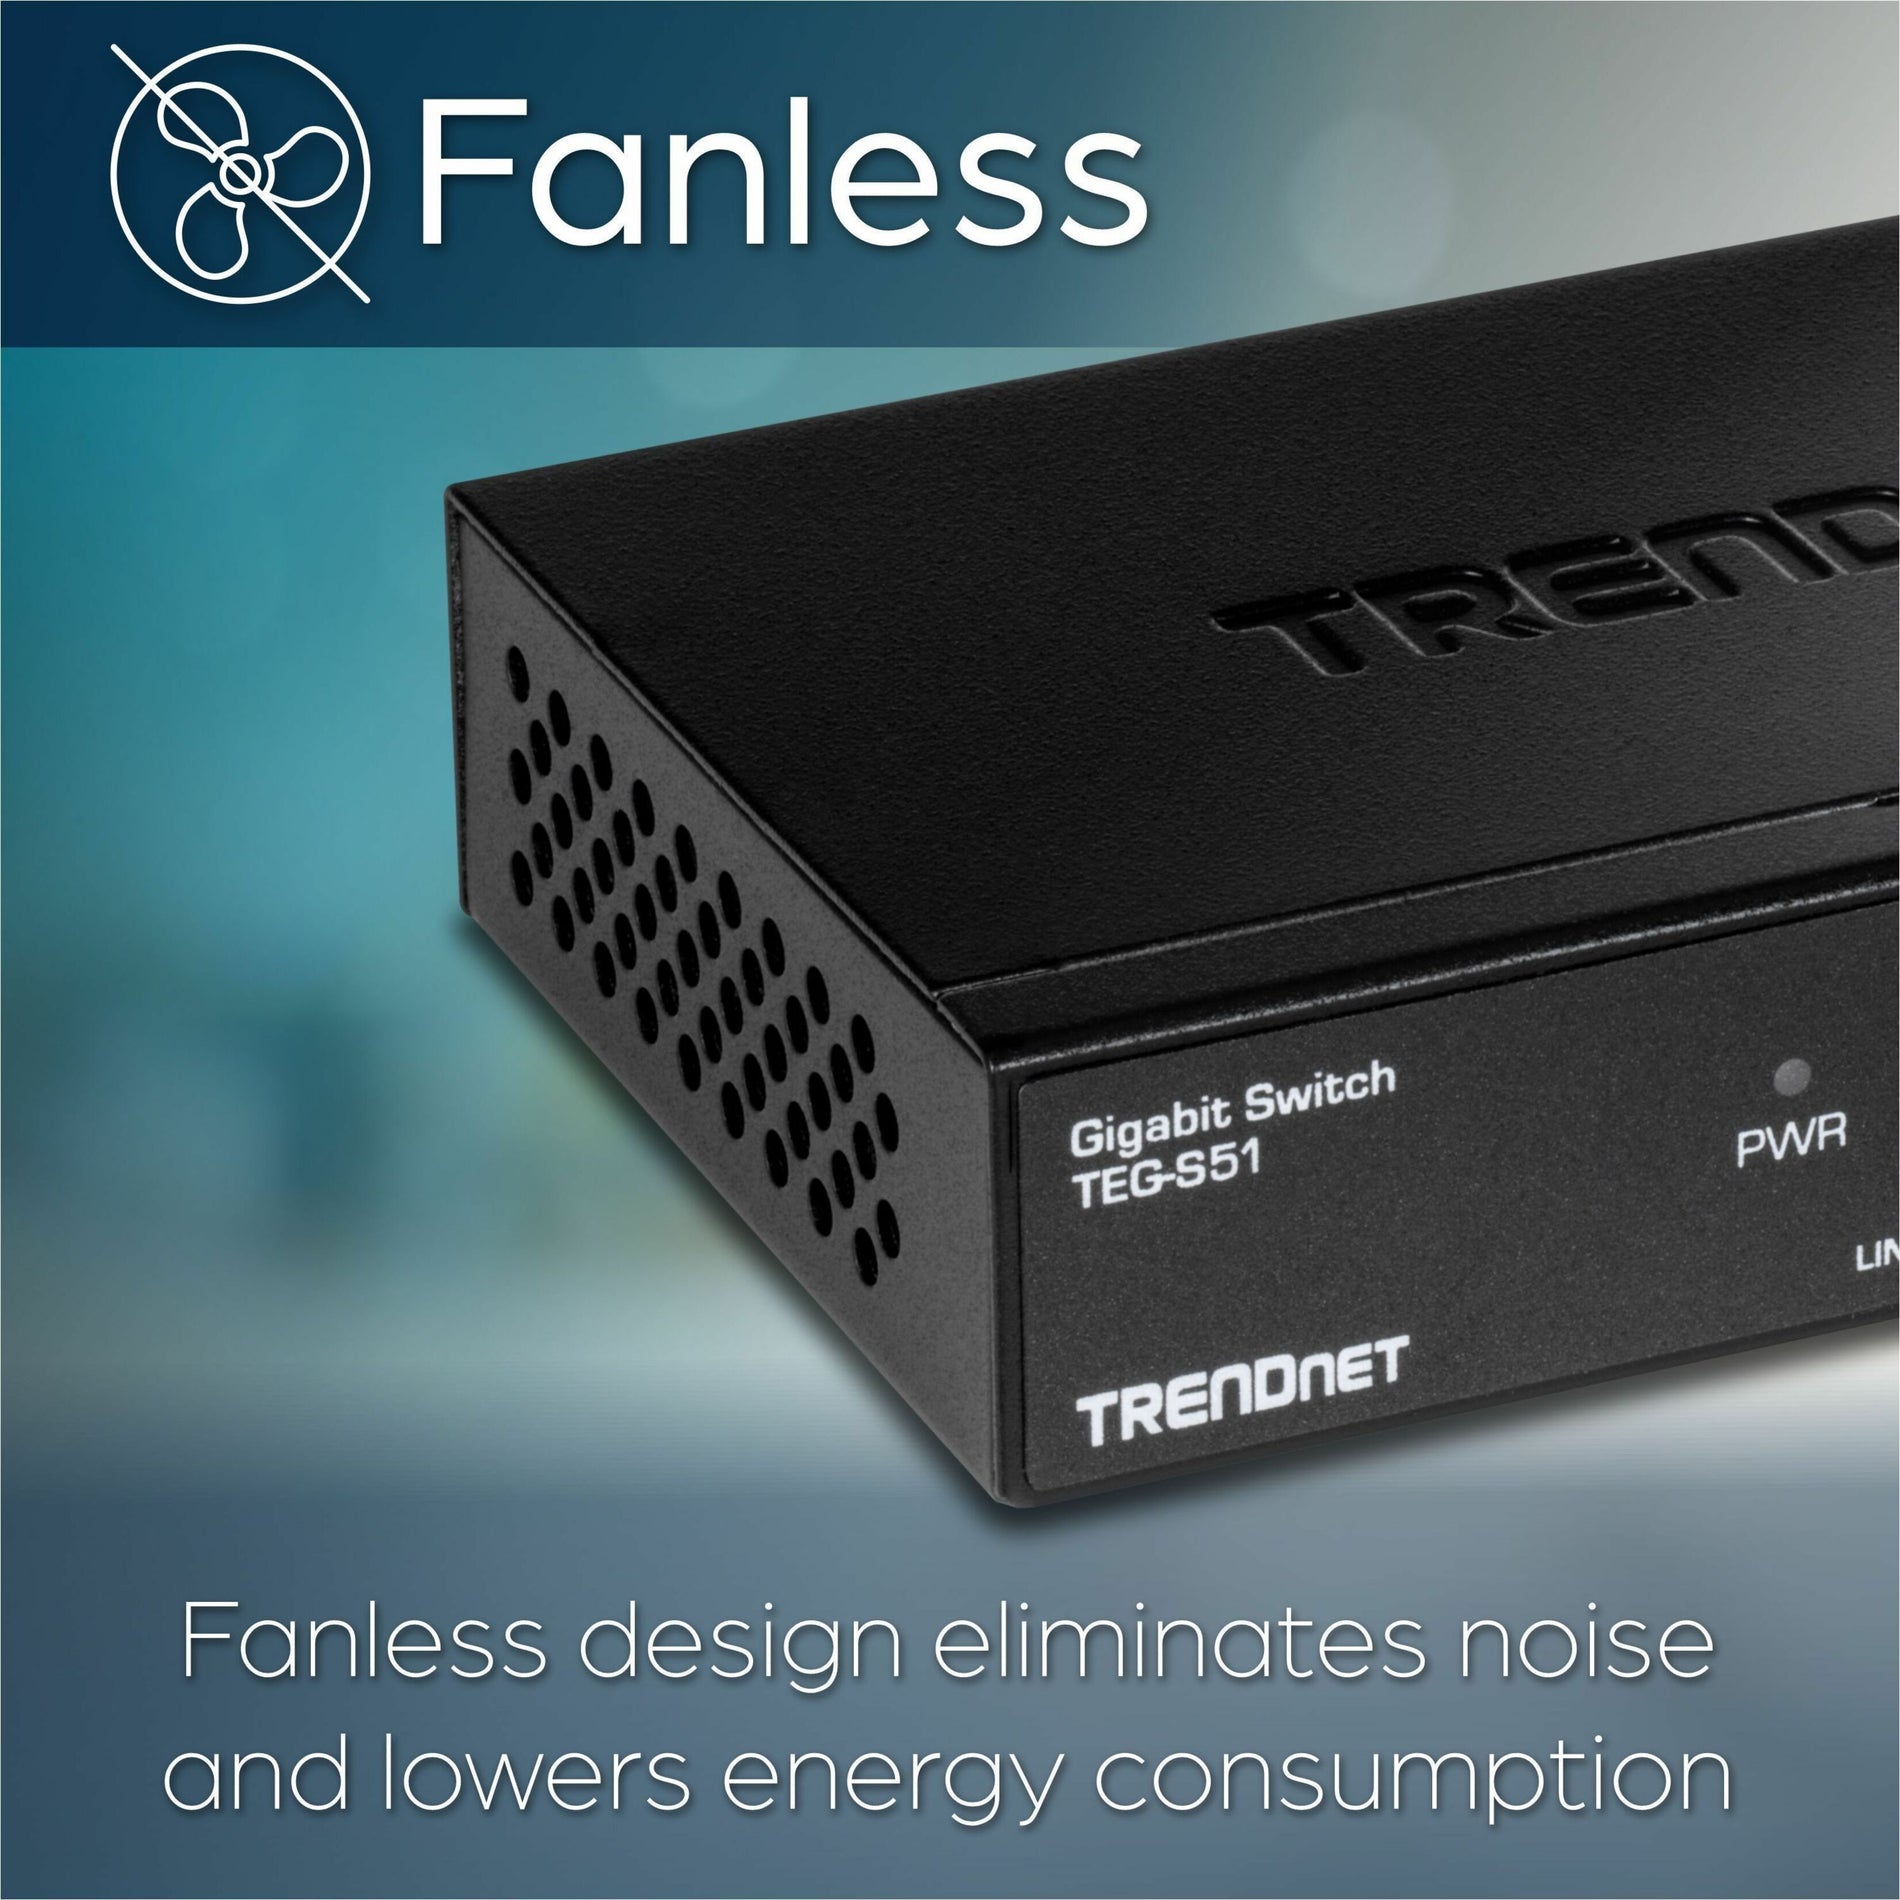 TRENDnet TEG-S51 5-Port Gigabit Desktop Switch, TAA Compliant, Student, Gaming, Multimedia, Business